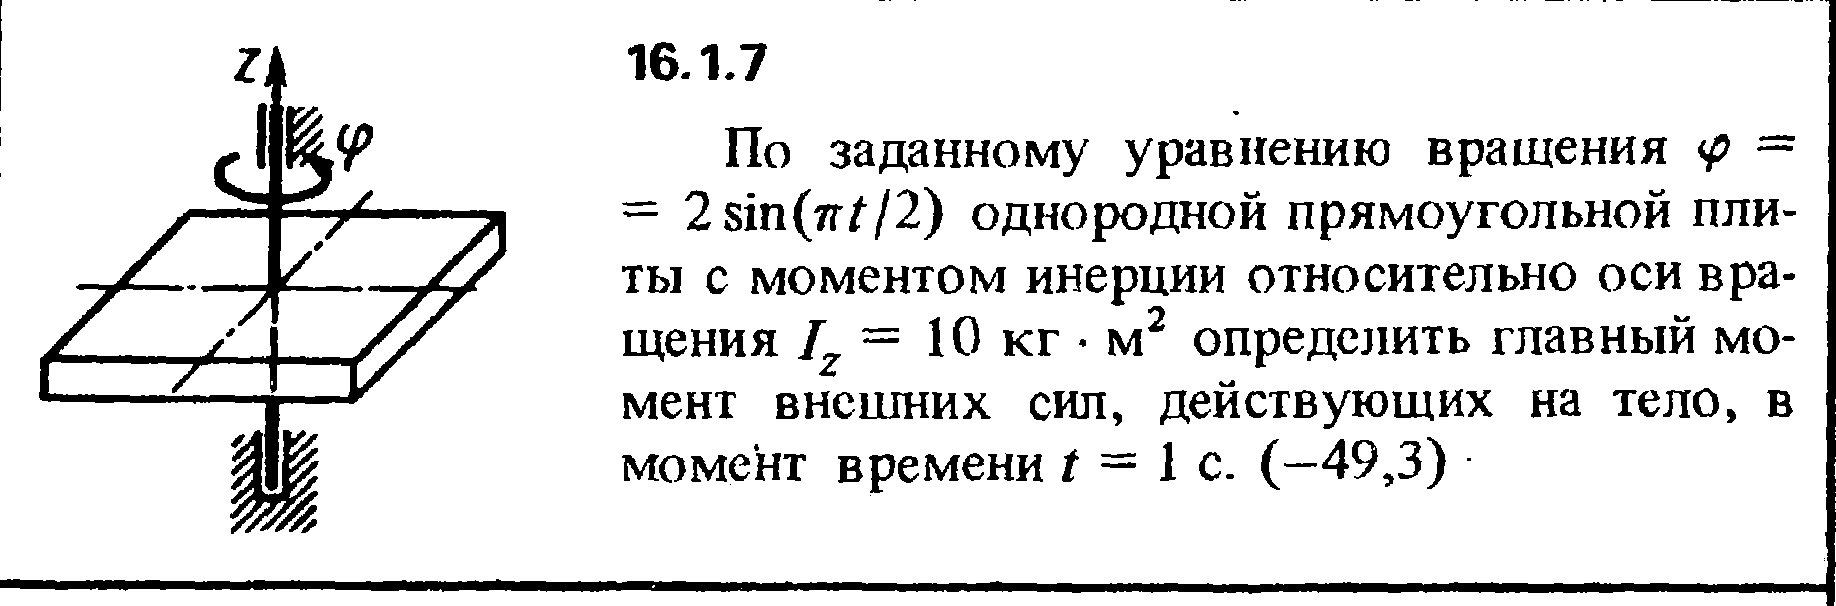 Решение задачи 16.1.7 из сборника Кепе О.Е. 1989 года